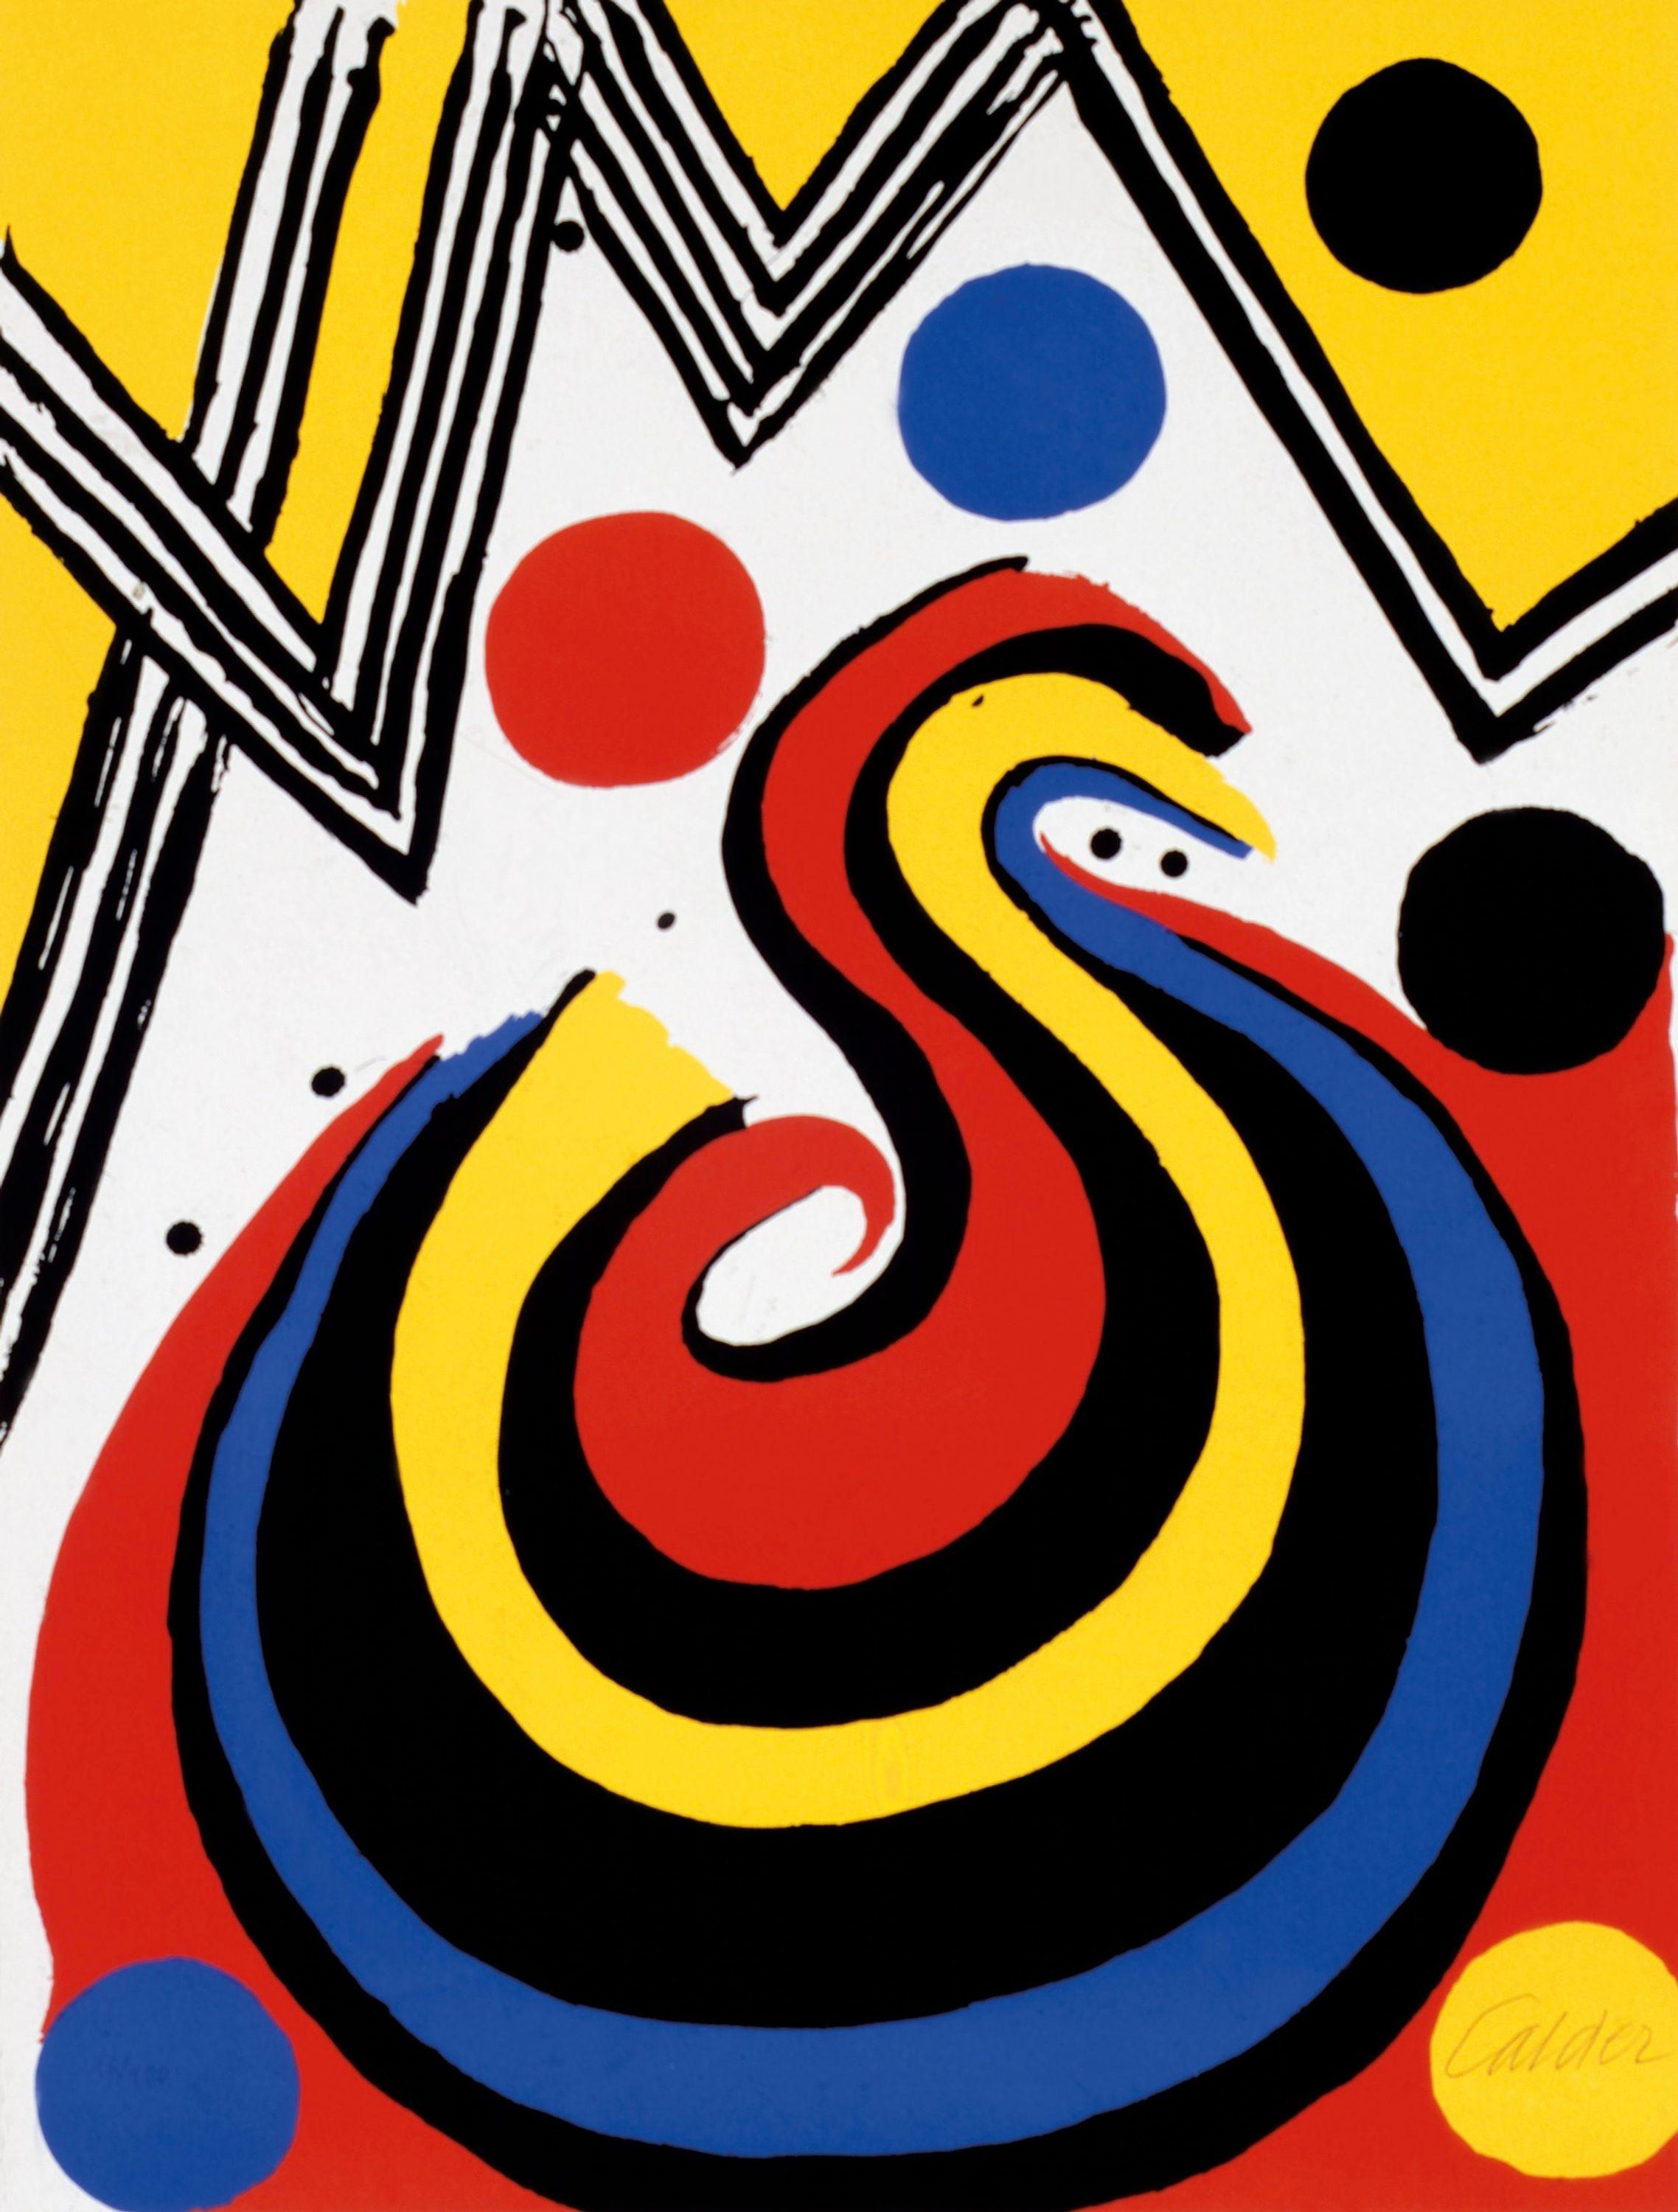 Girandola - Print by Alexander Calder